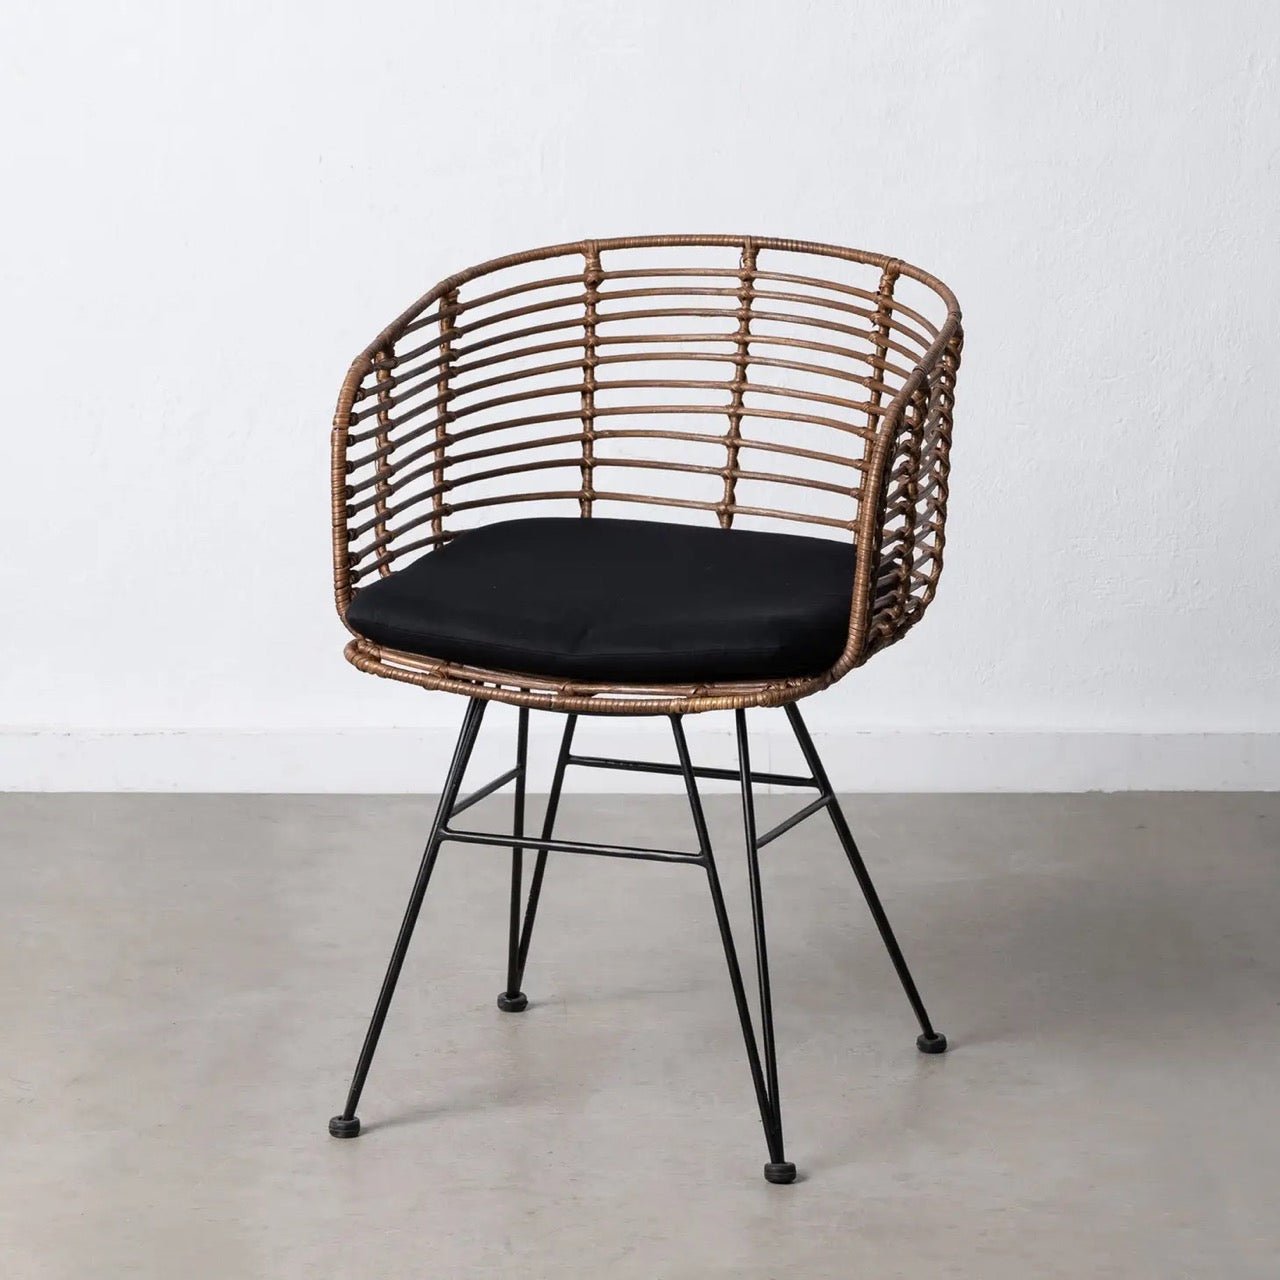 Rattan Dining Chair - Brown/Black armchair with cushion